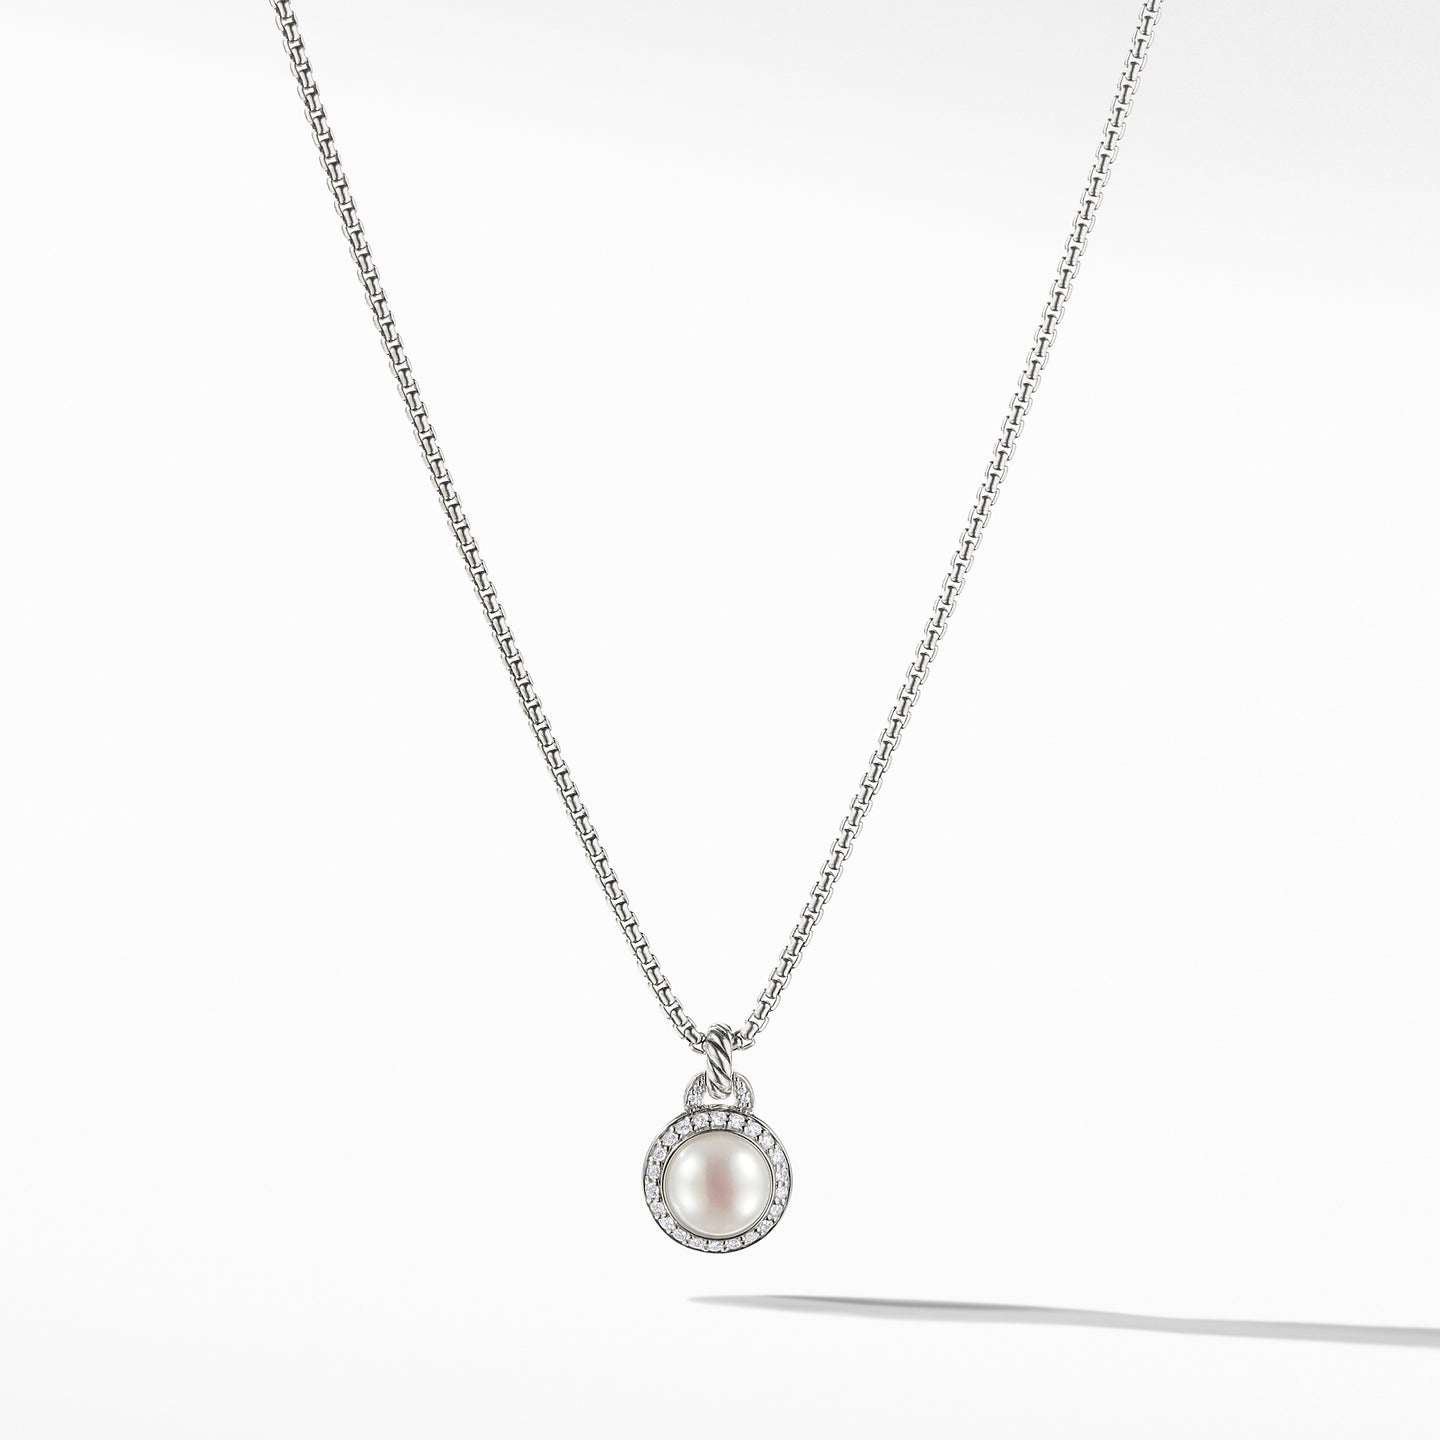 David Yurman Pearl Necklace with Diamonds